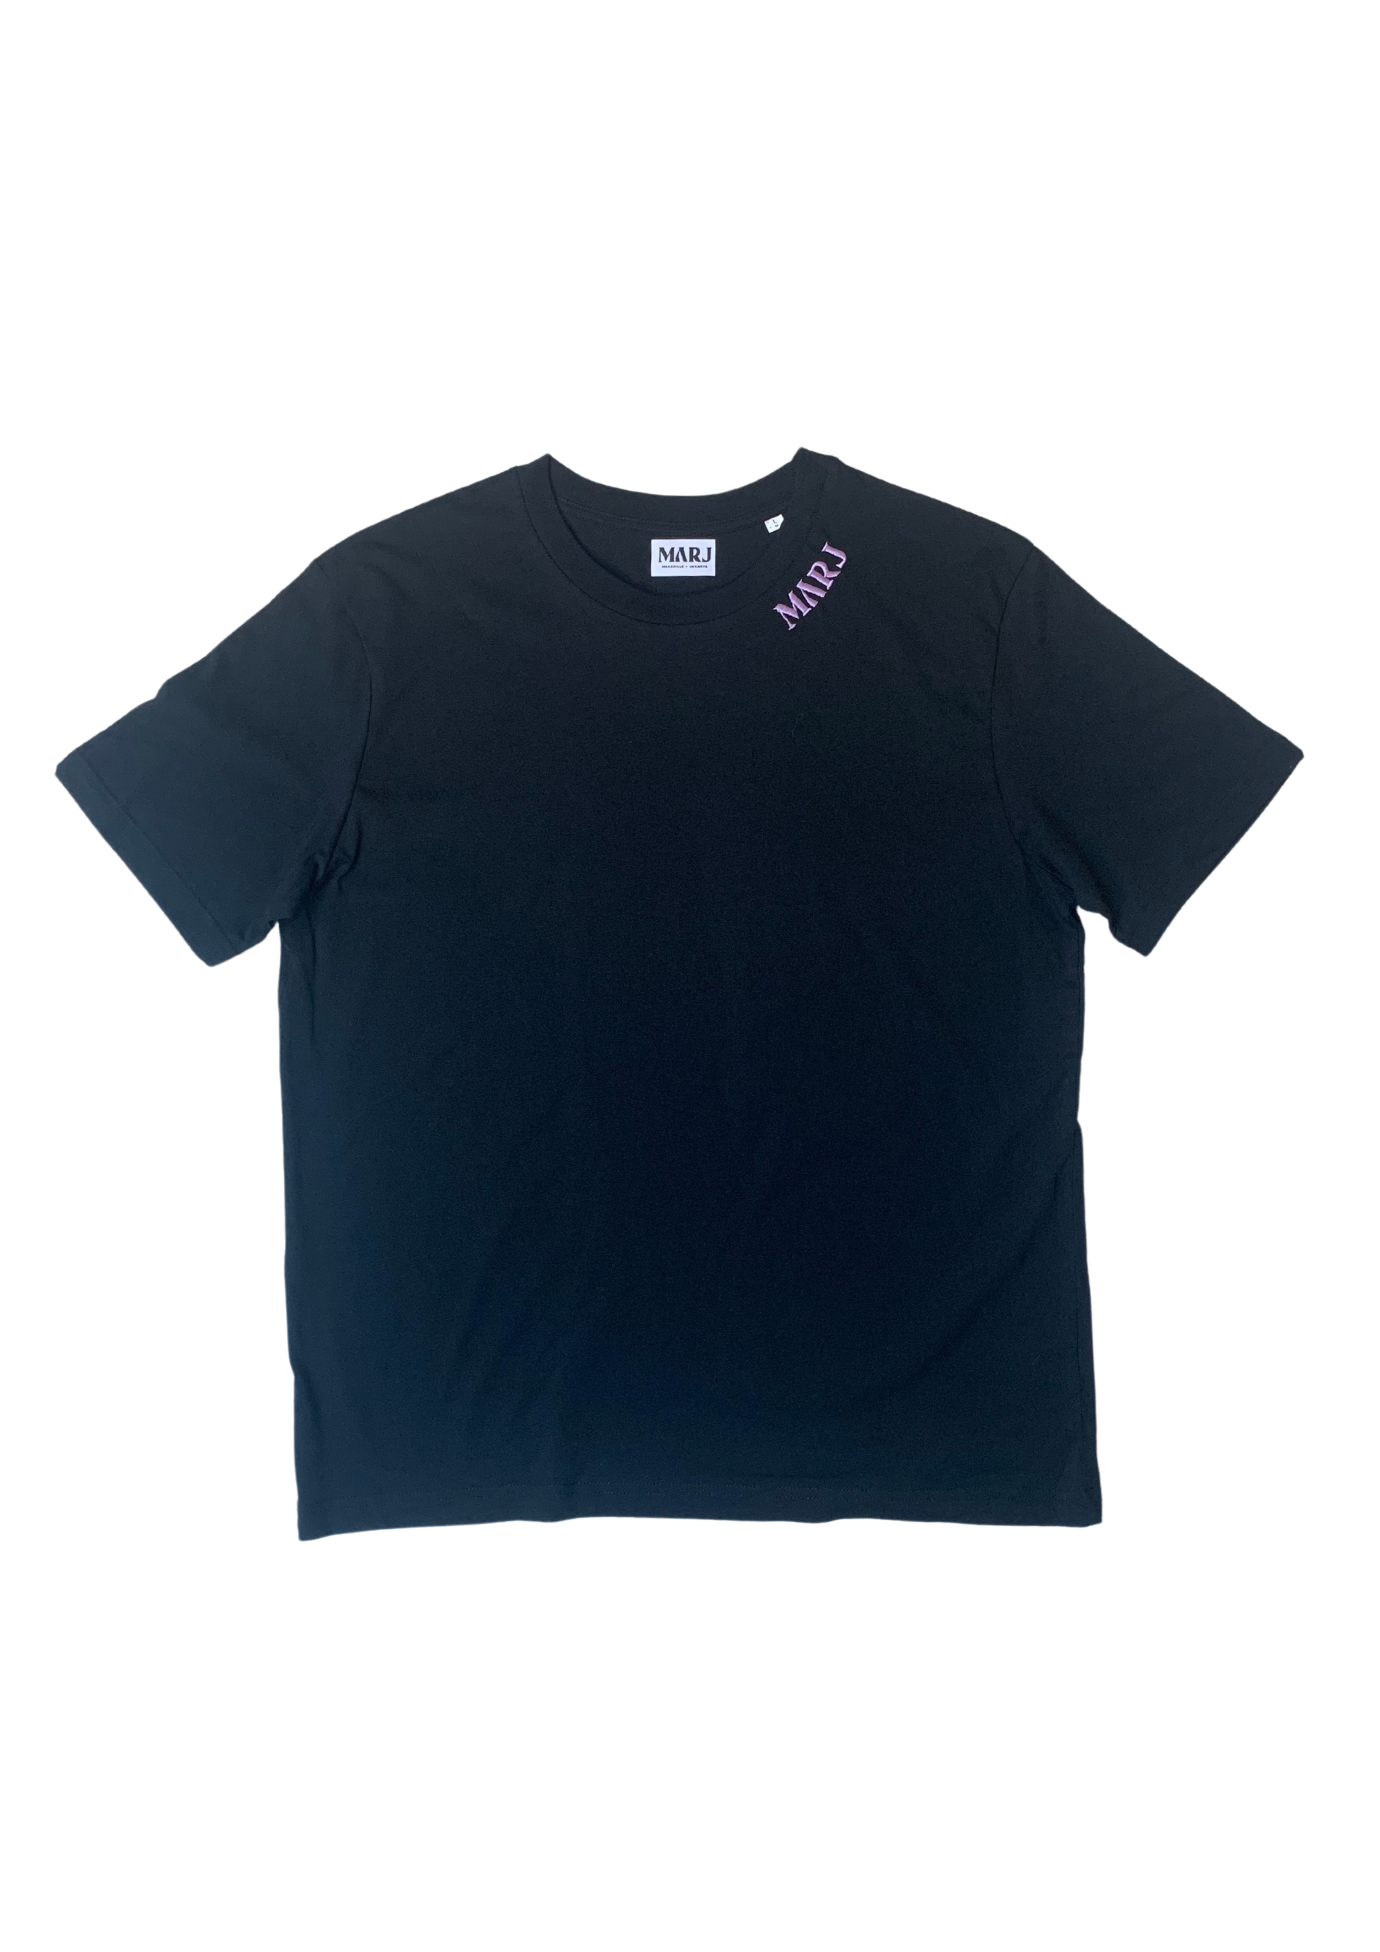 MARJ sustainable fashion black T shirt lavender embroidery streetwear